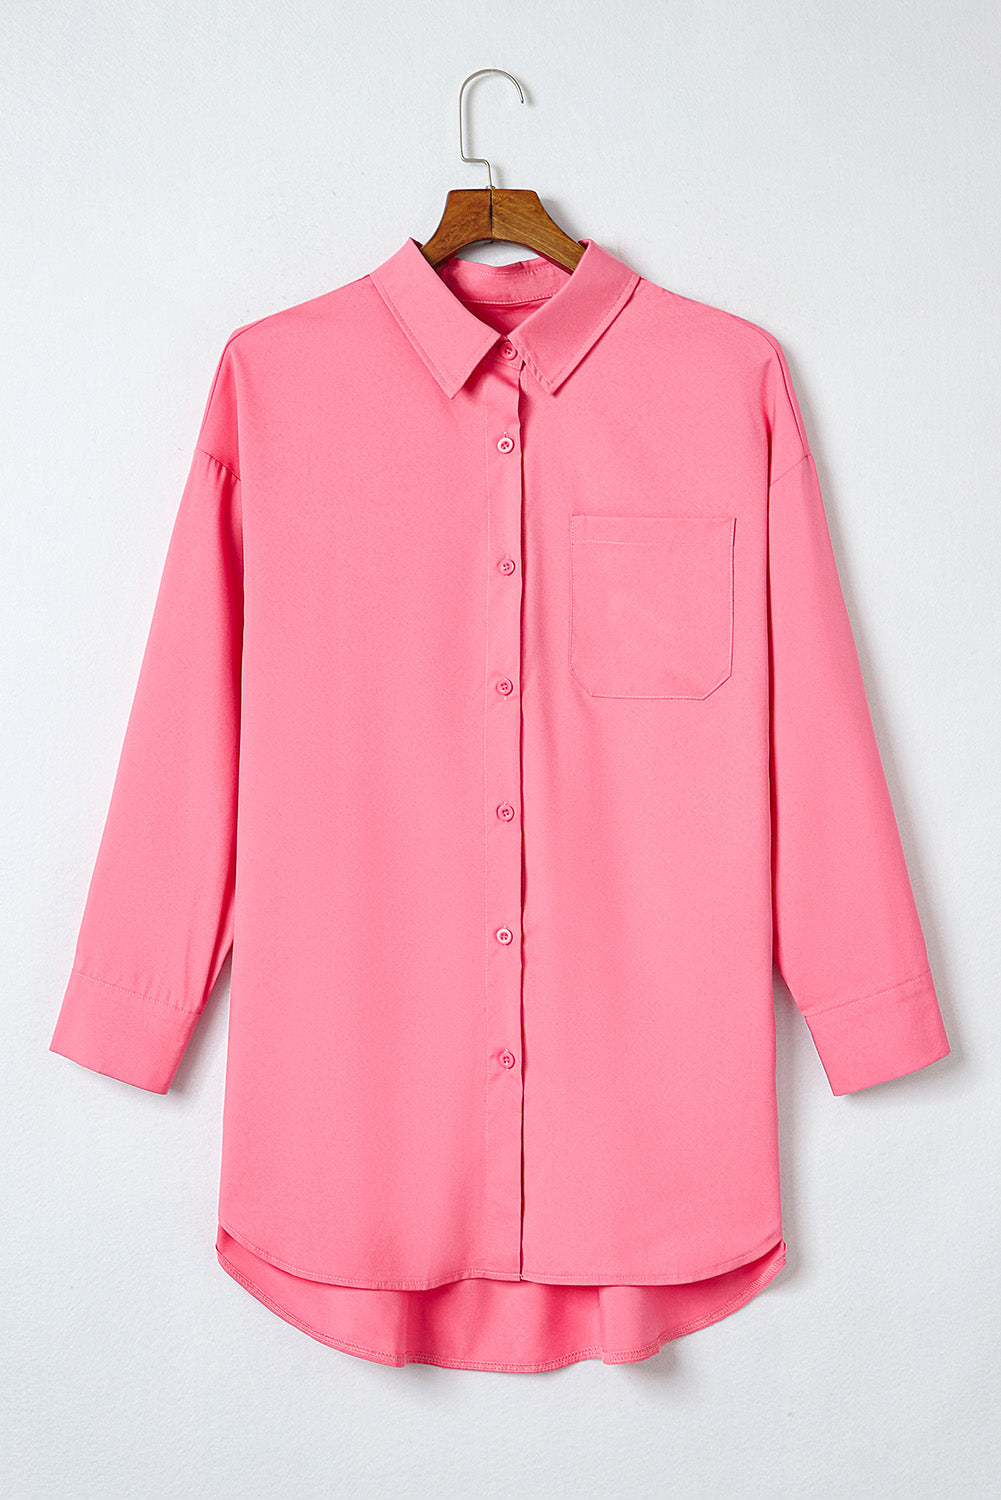 Rosa einfarbiges, langärmliges, übergroßes Tunika-Shirt